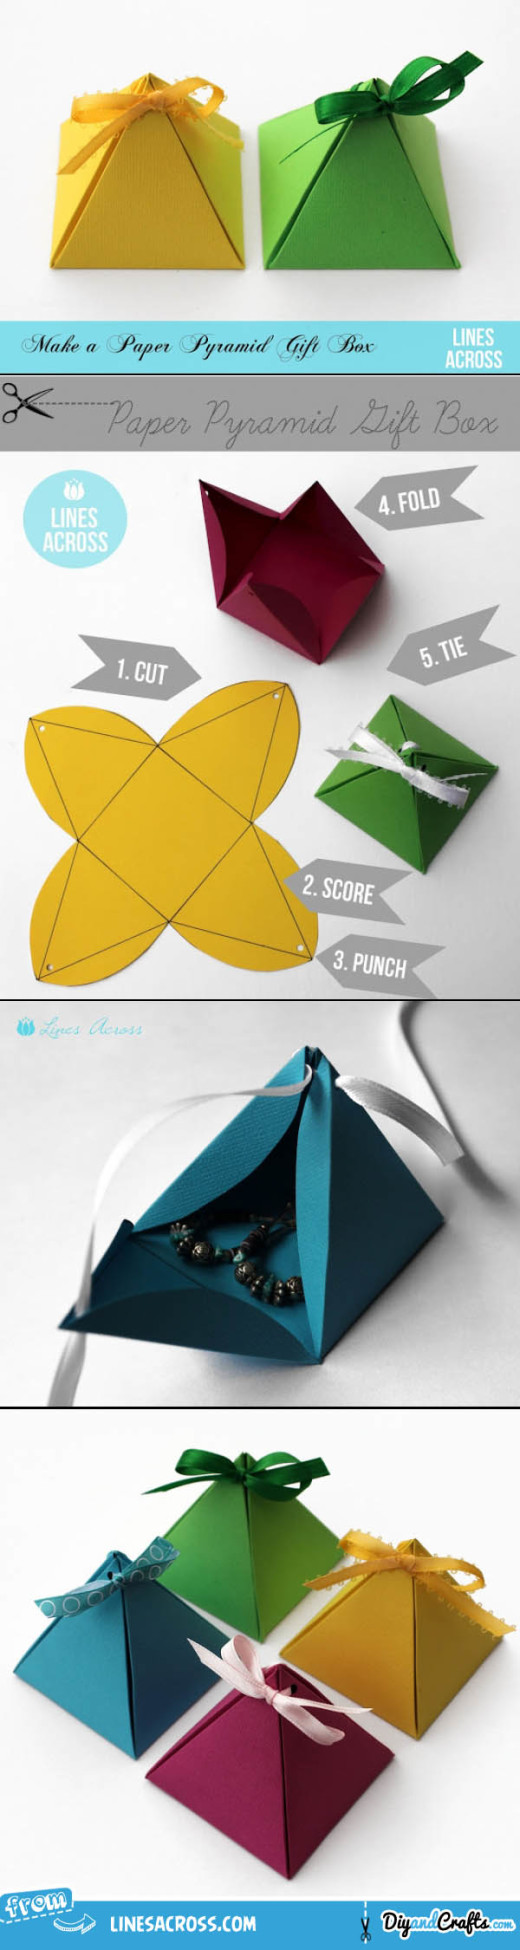 Paper Pyramid Gift Boxes | DIY